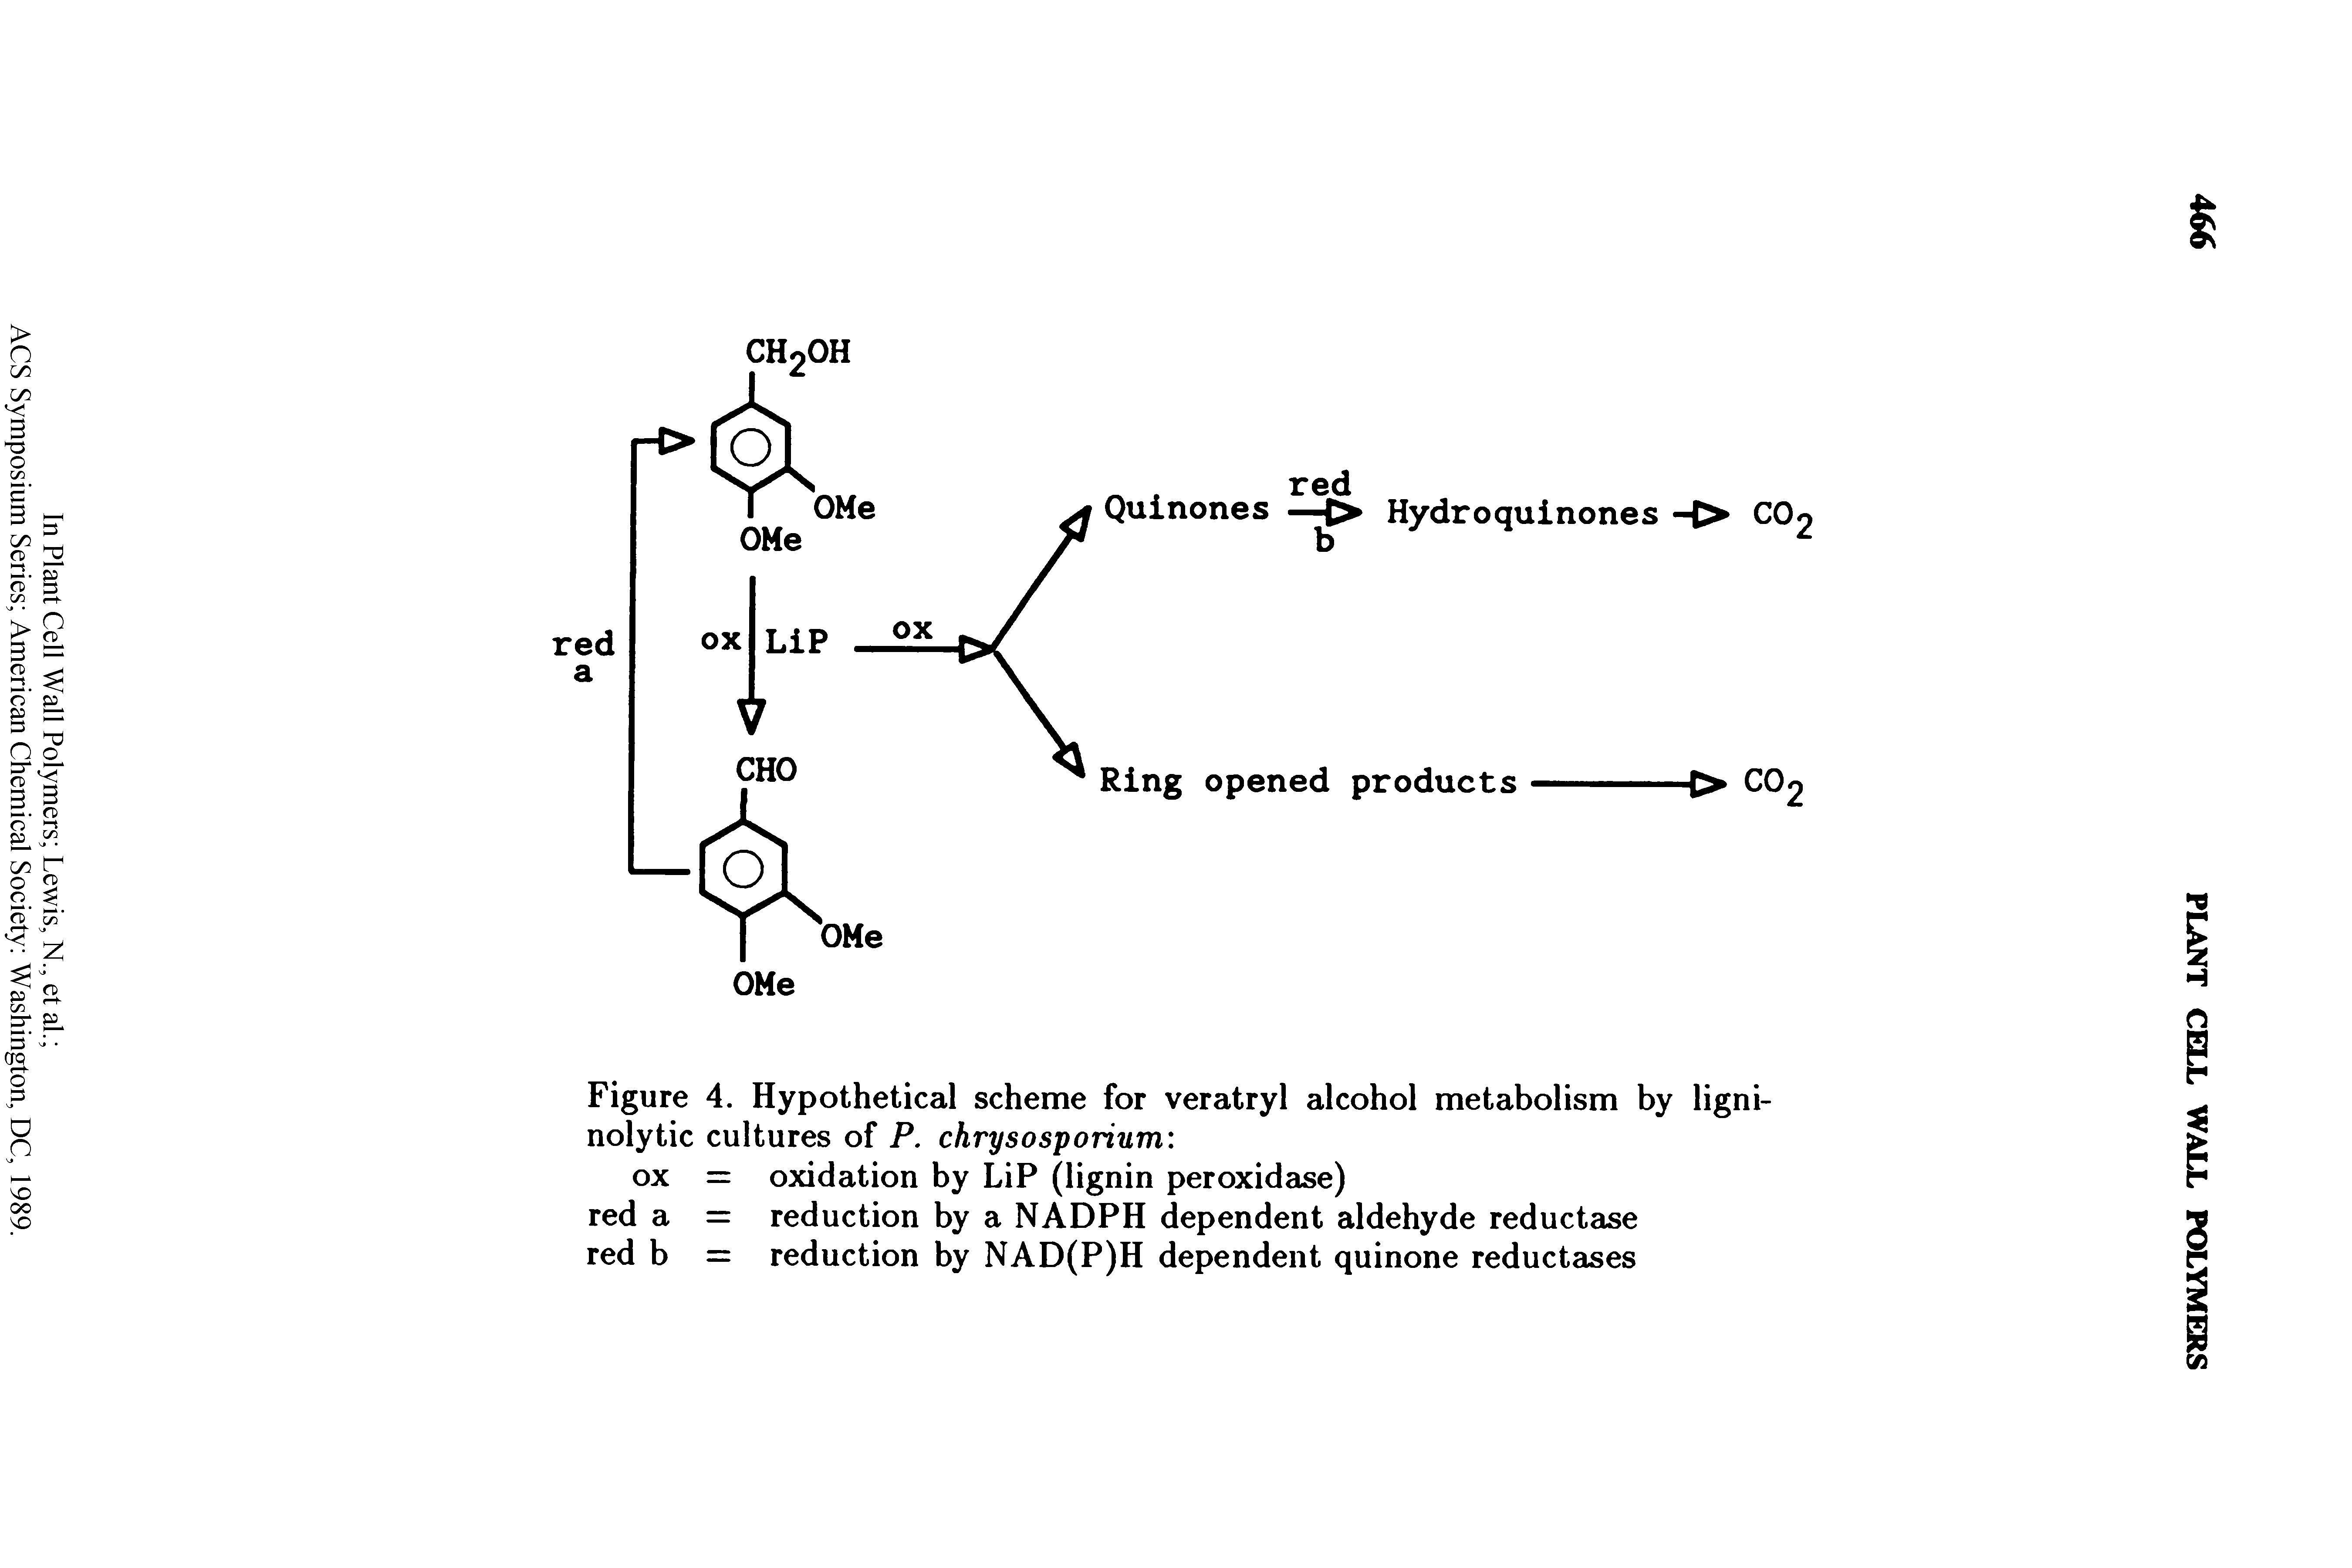 Figure 4. Hypothetical scheme for veratryl alcohol metabolism by ligni-nolytic cultures of P. chrysosporium ...